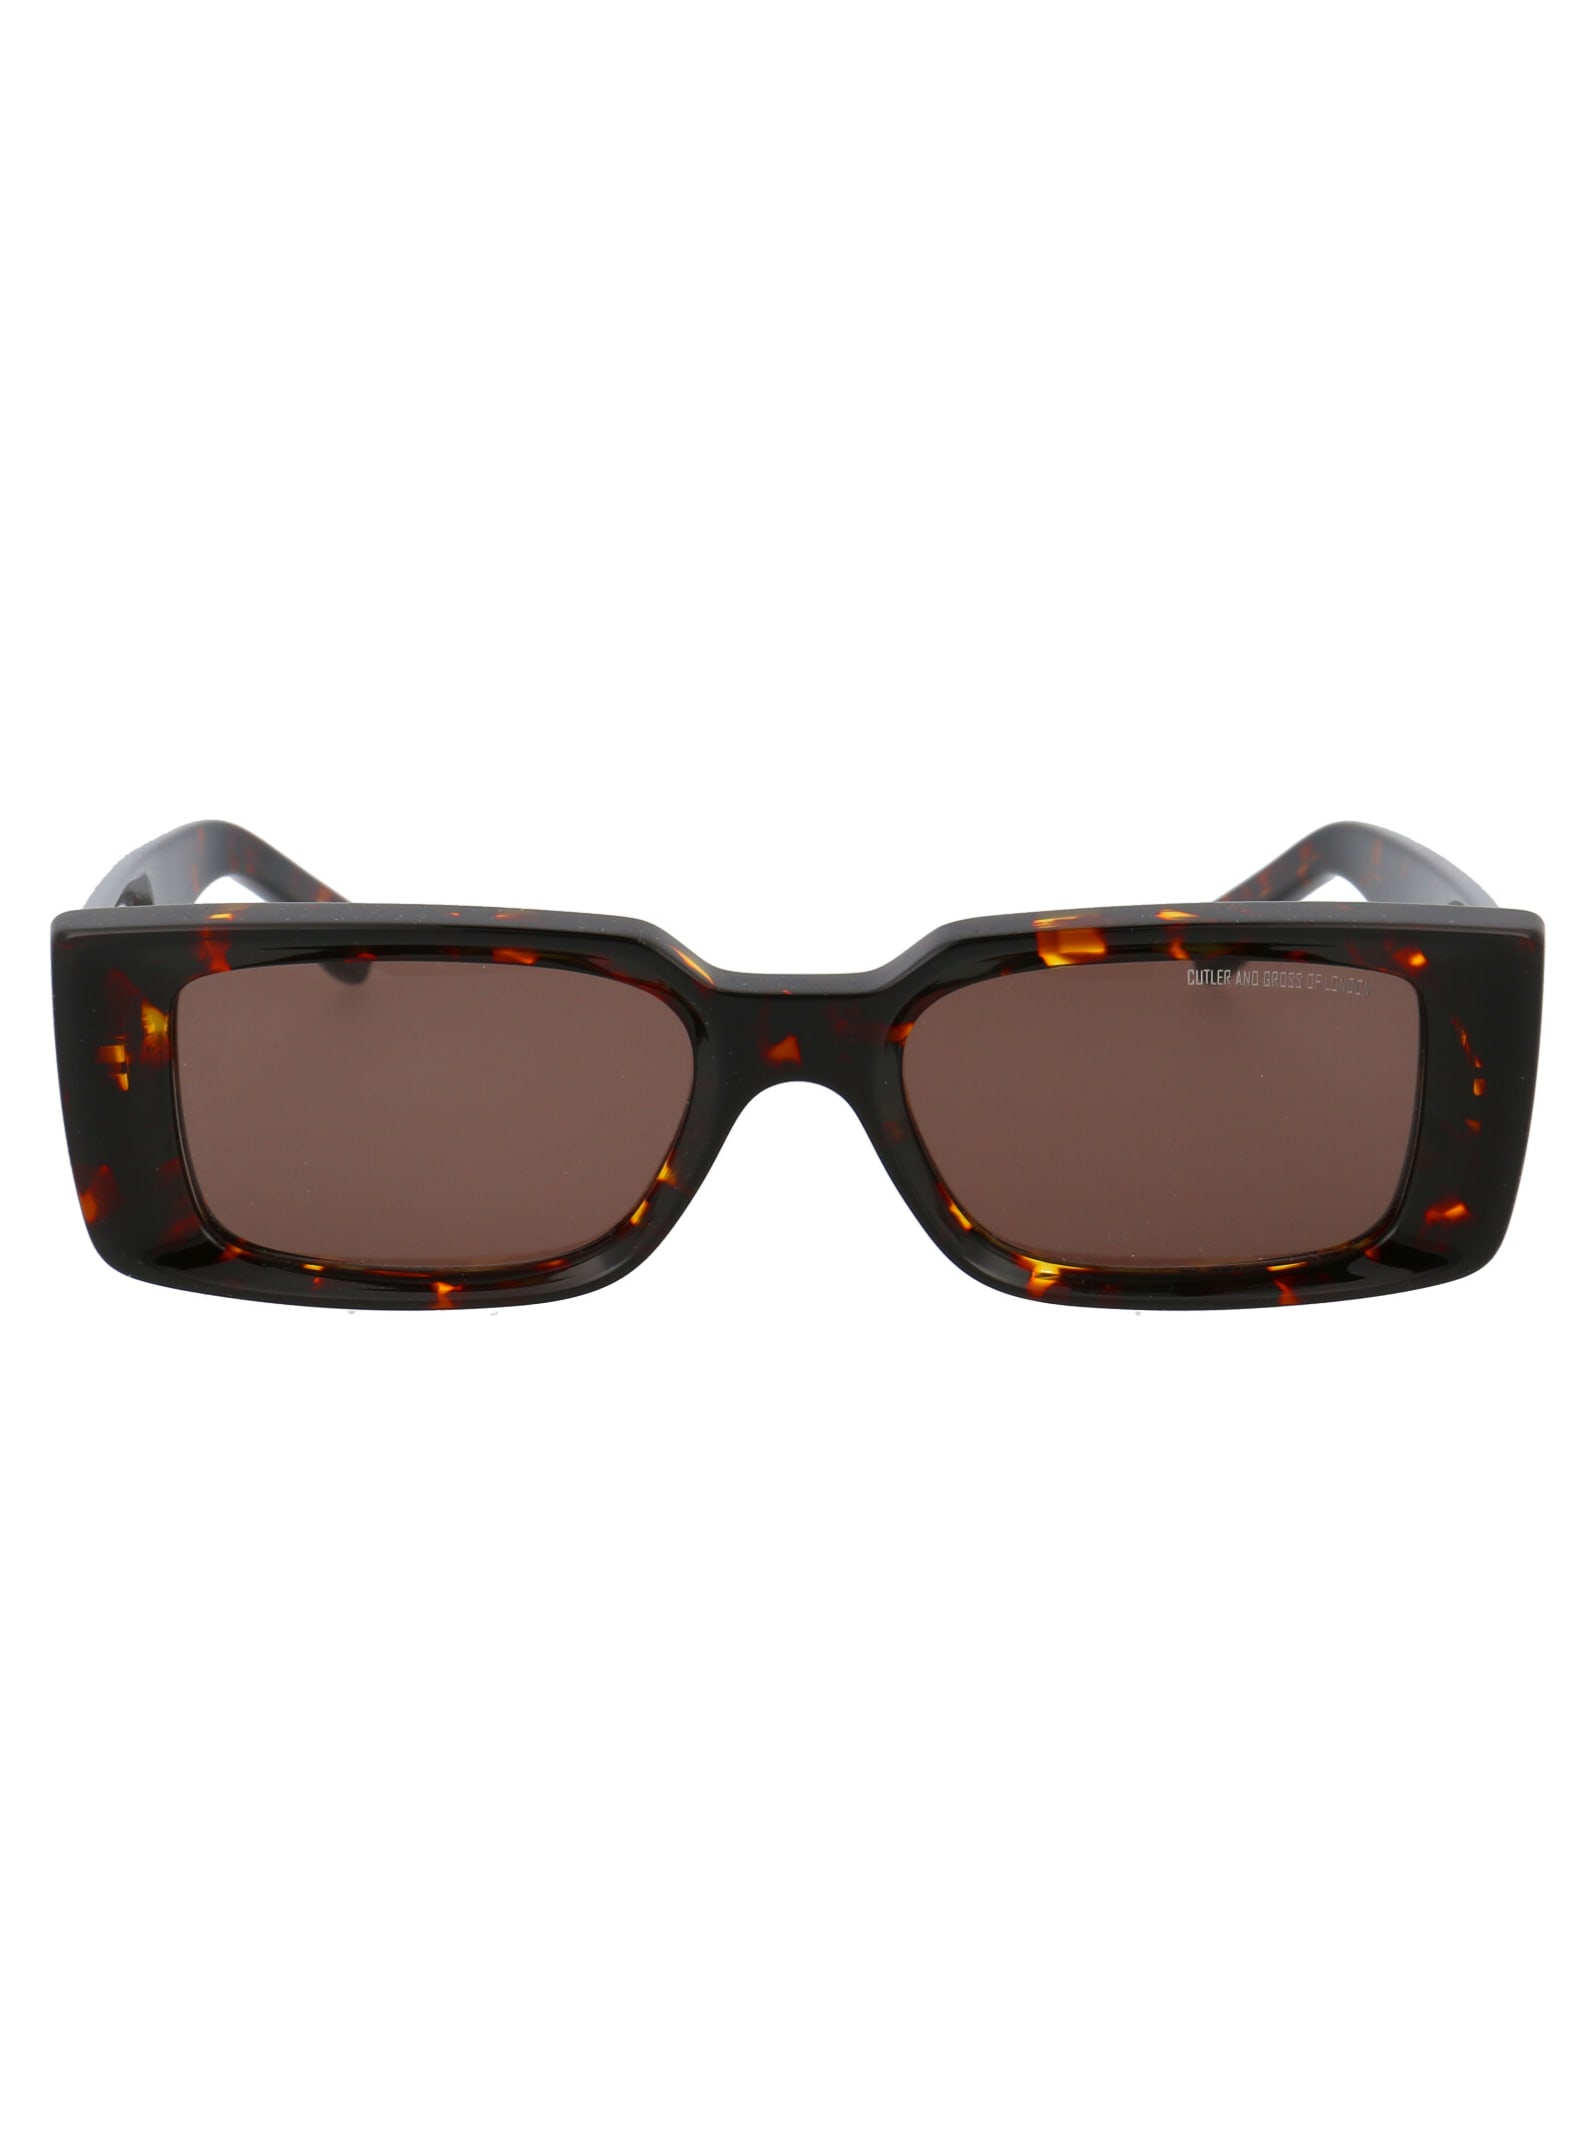 Cutler and Gross 1368 Sunglasses